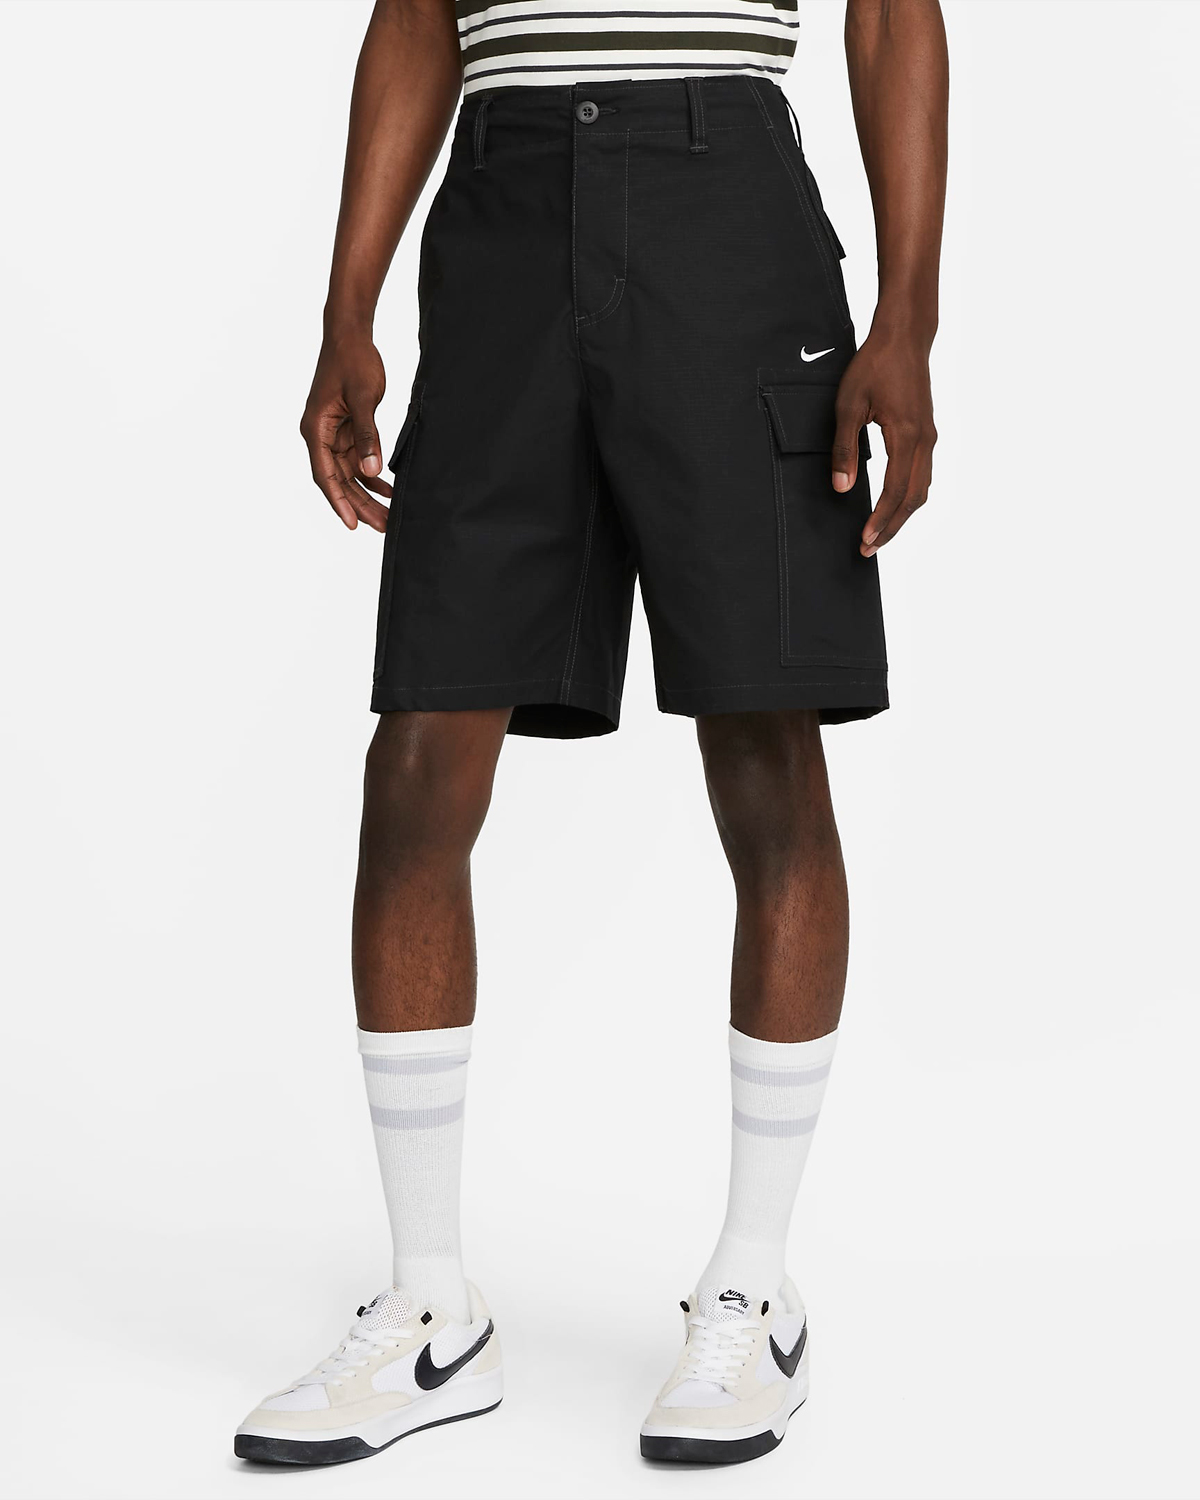 Nike-SB-Skate-Cargo-Shorts-Black-White